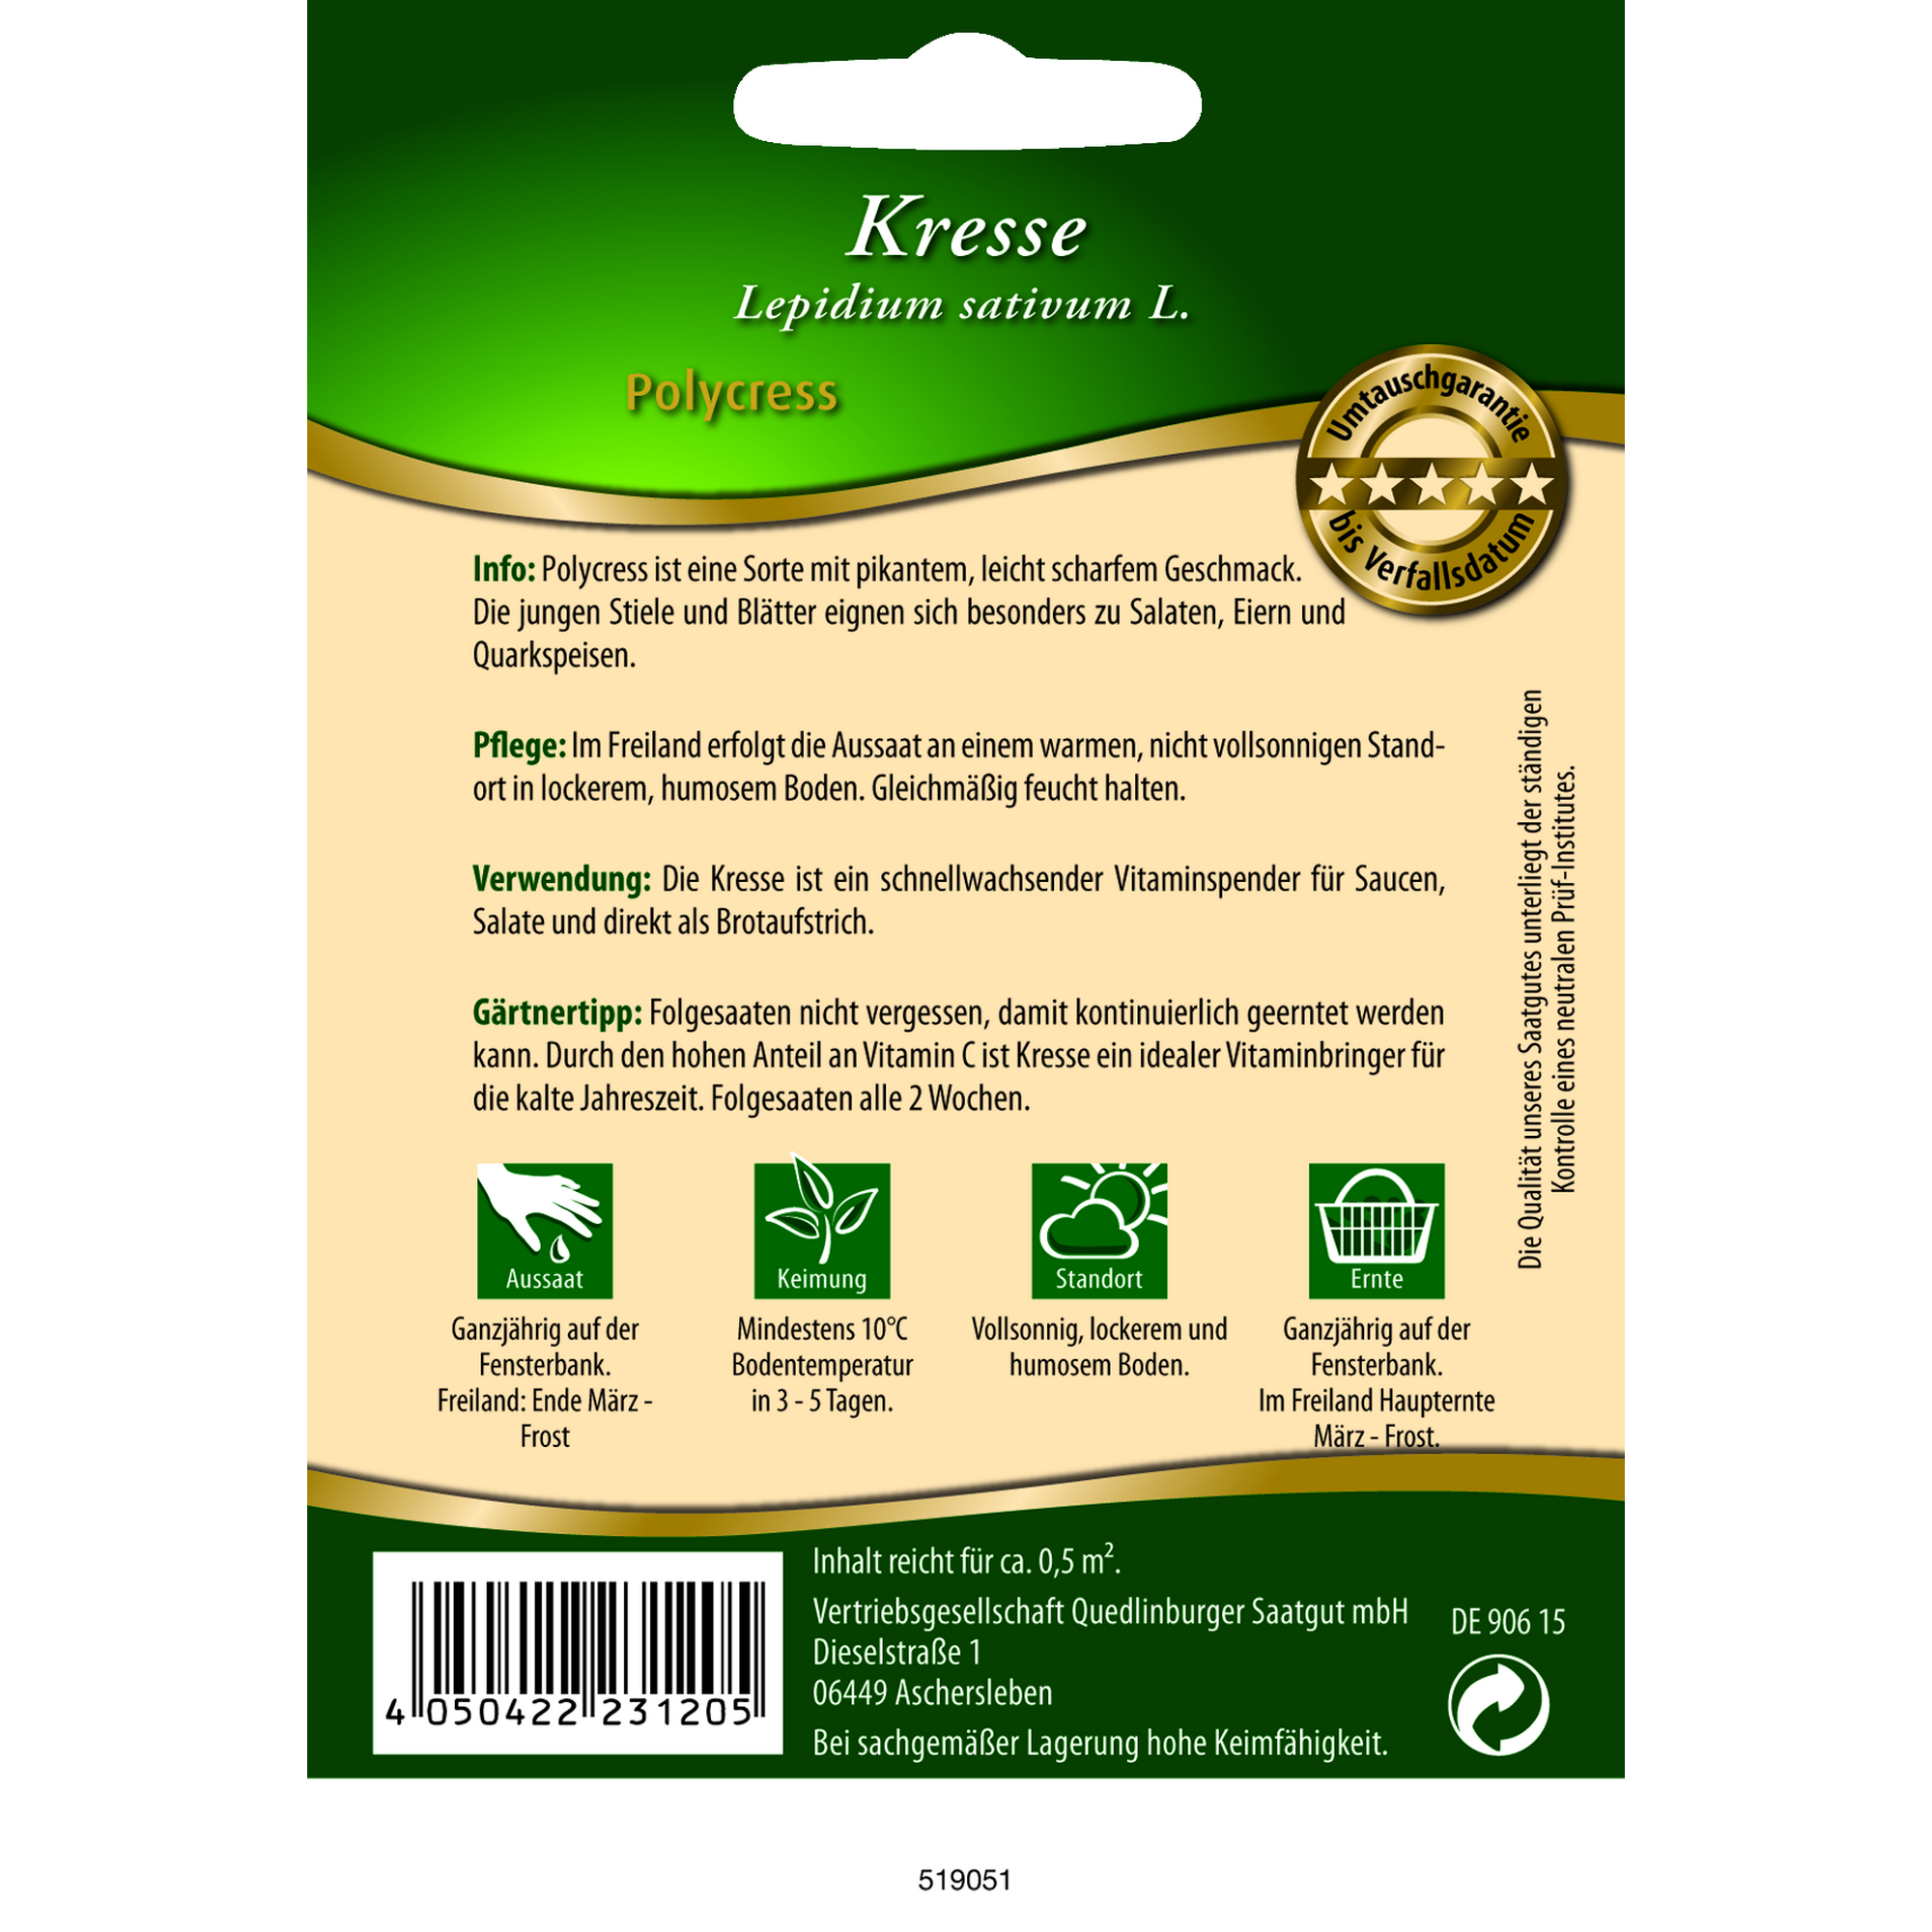 Premium Kresse Polycress + product picture